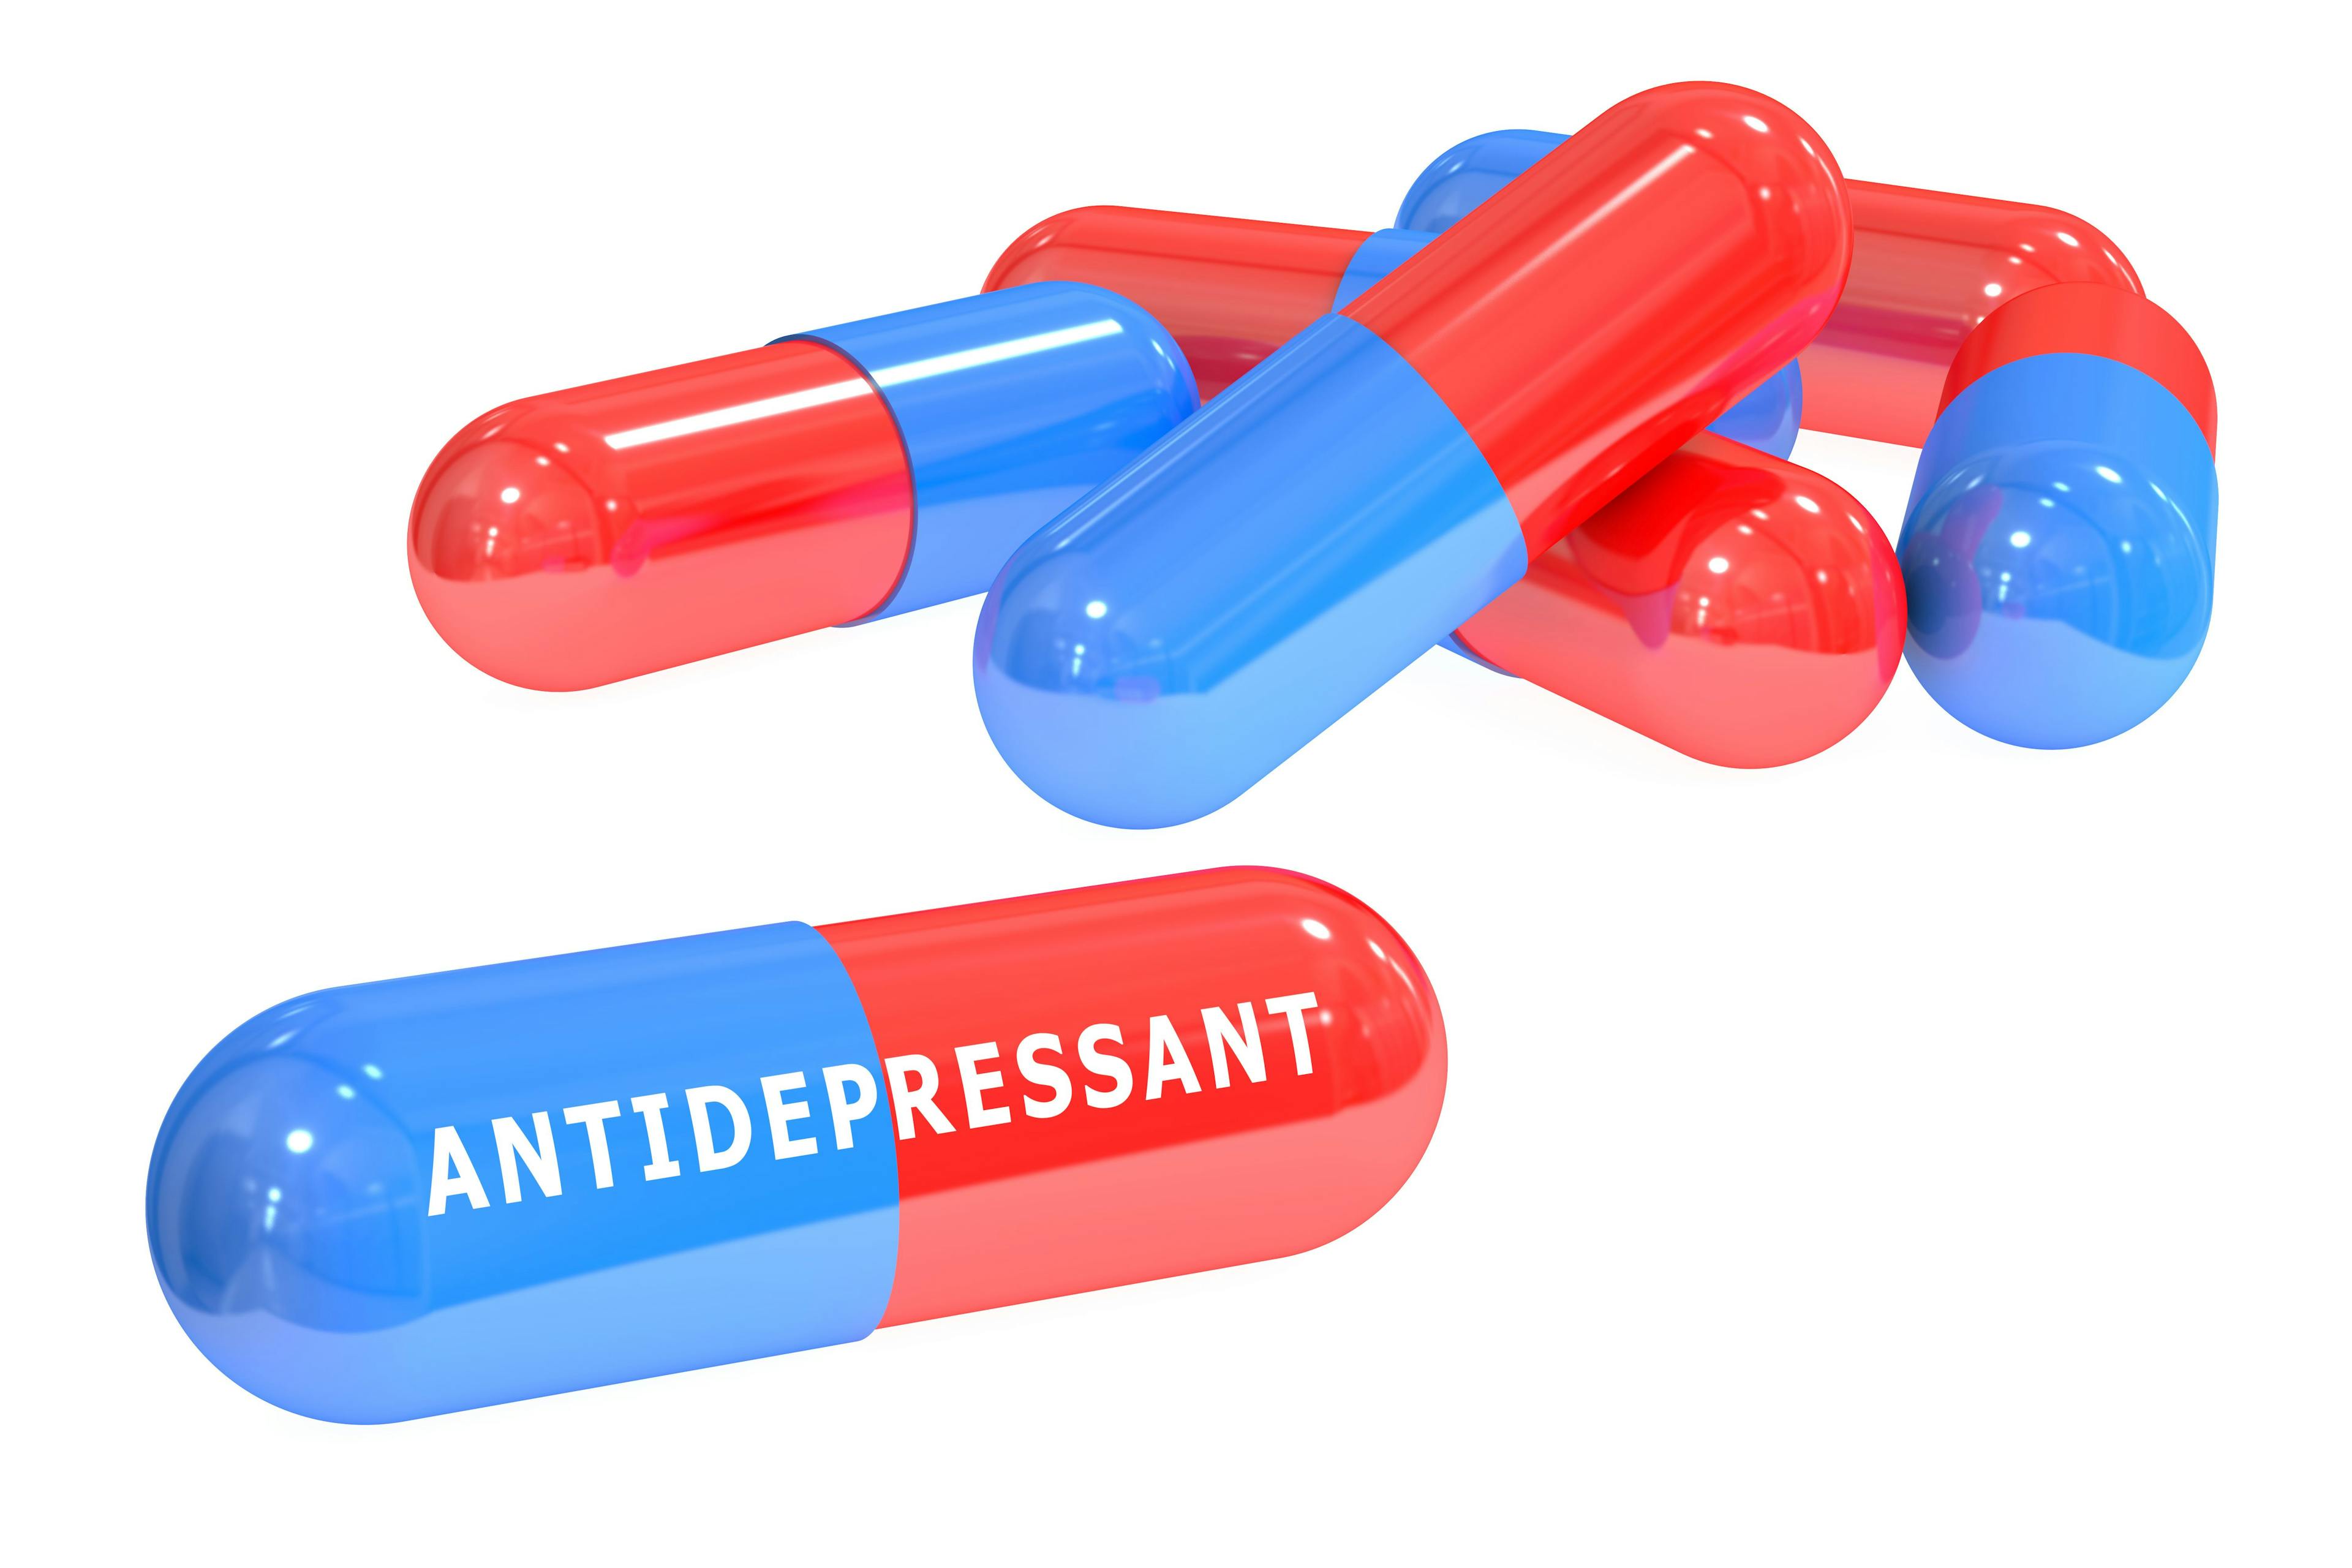 antidepressant pills 3D rendering | Image Credit: © alexlmx - stock.adobe.com